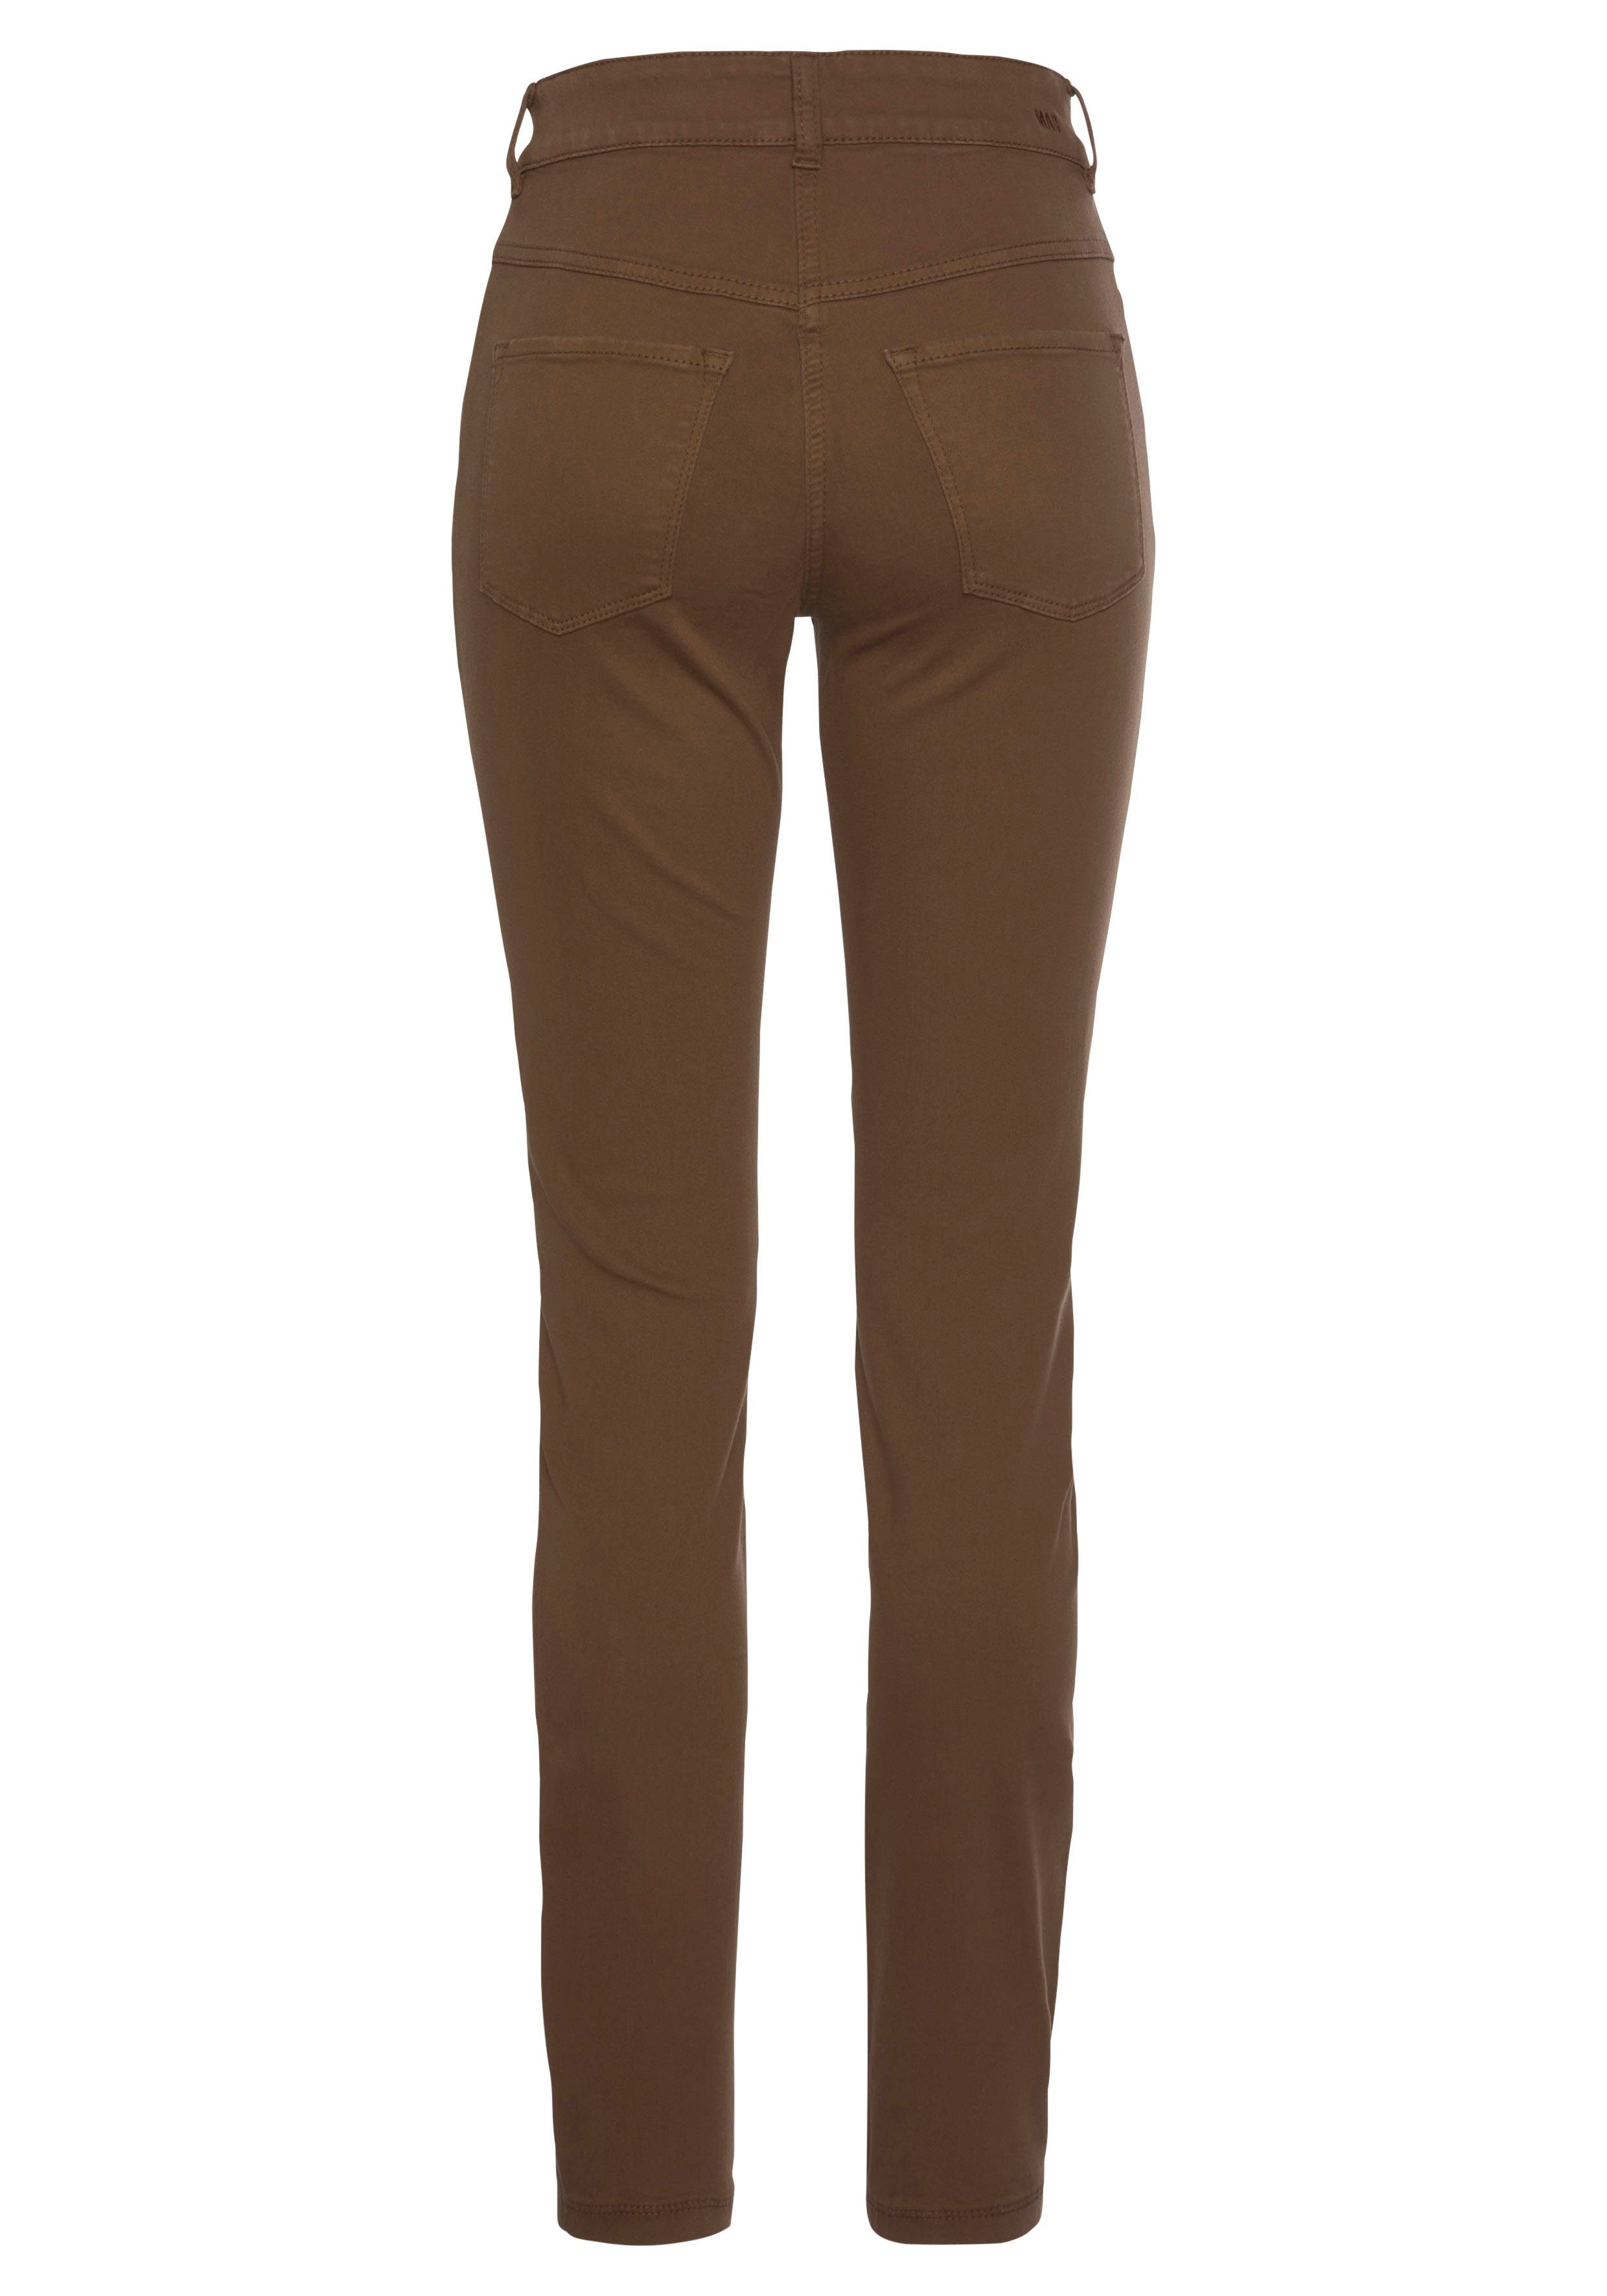 bequem Qualität Hiperstretch-Skinny brown Power-Stretch fawn Tag MAC ganzen sitzt Skinny-fit-Jeans den